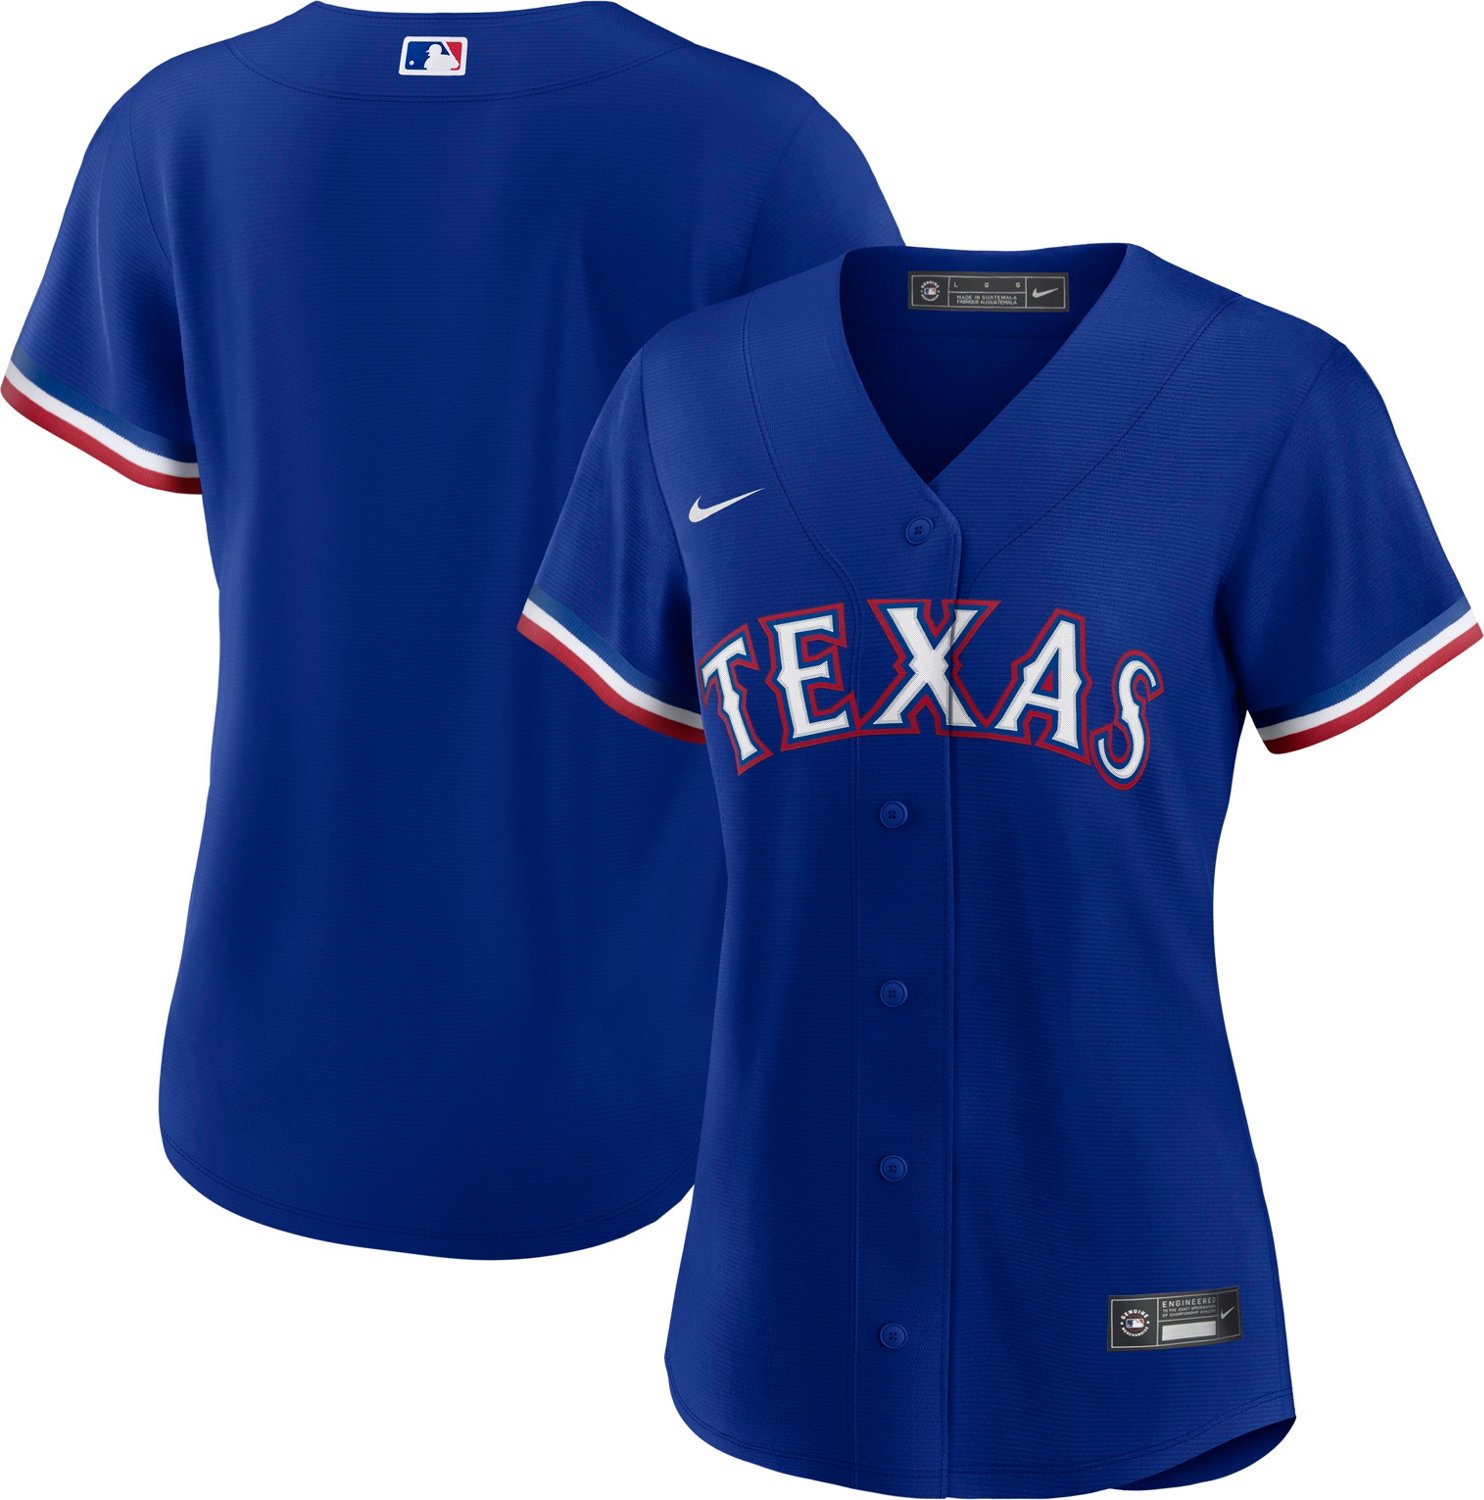 Nike Women's Texas Rangers Replica Jersey | Academy